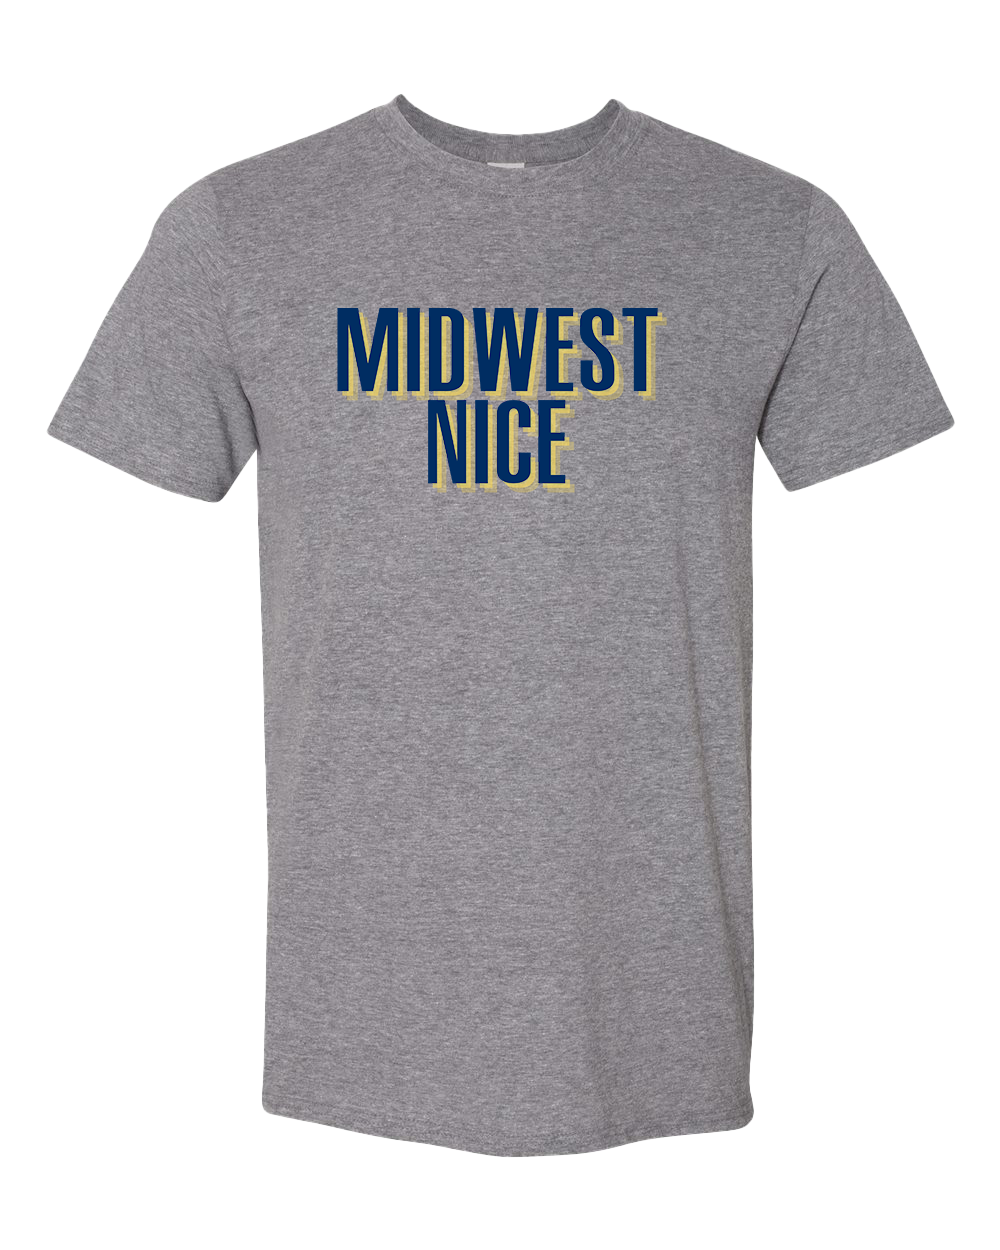 Midwest Nice Tshirt - Graphite Heather